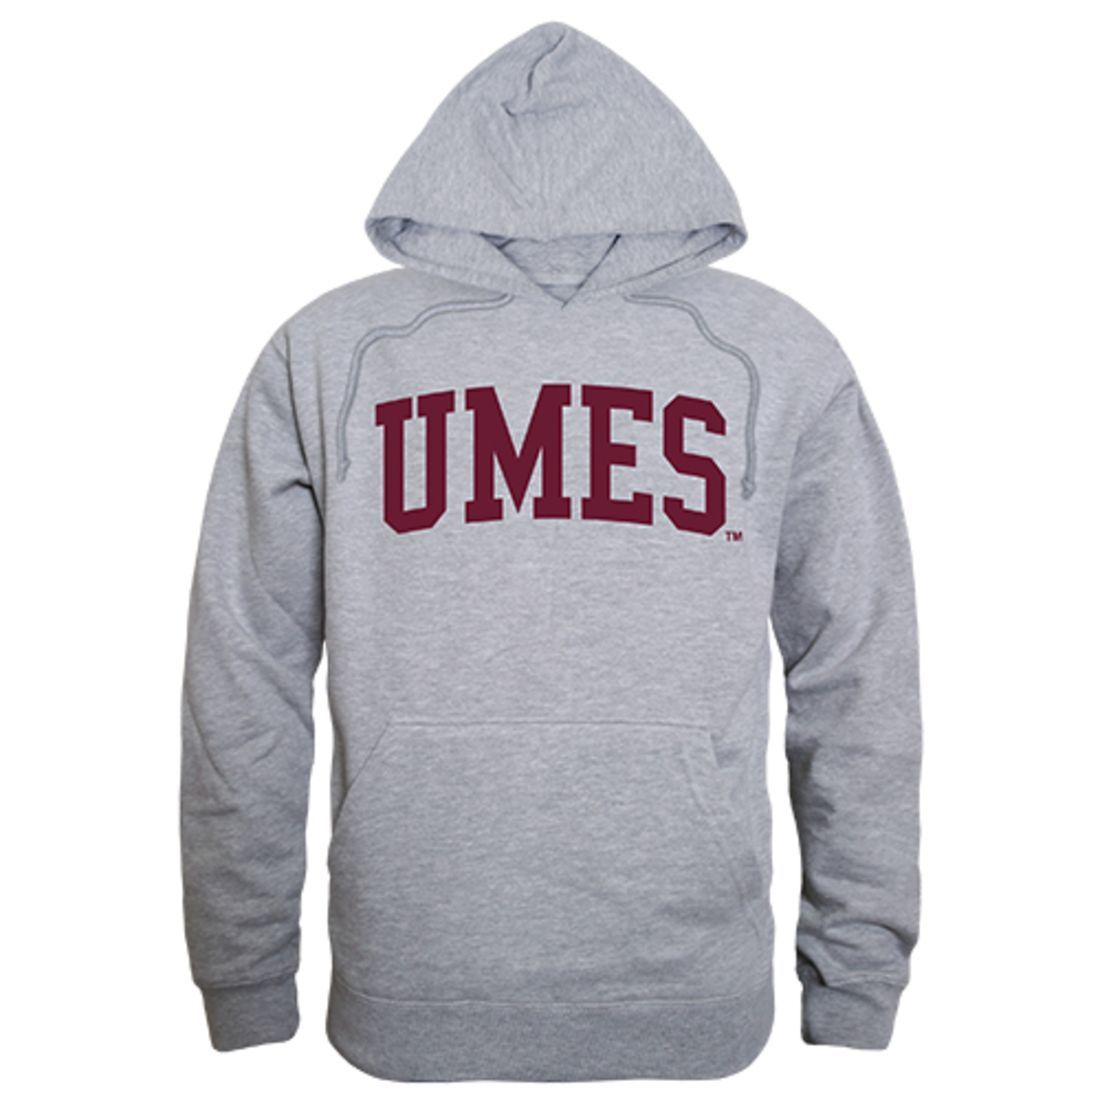 UMES University of Maryland Eastern Shore Game Day Hoodie Sweatshirt Heather Grey-Campus-Wardrobe